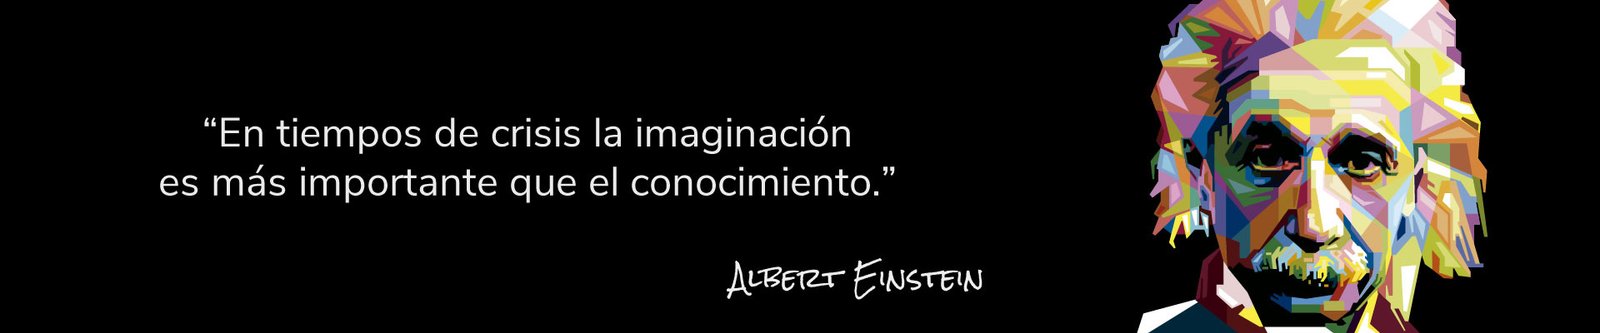 Frases célebres Albert Einstein - Imaginación